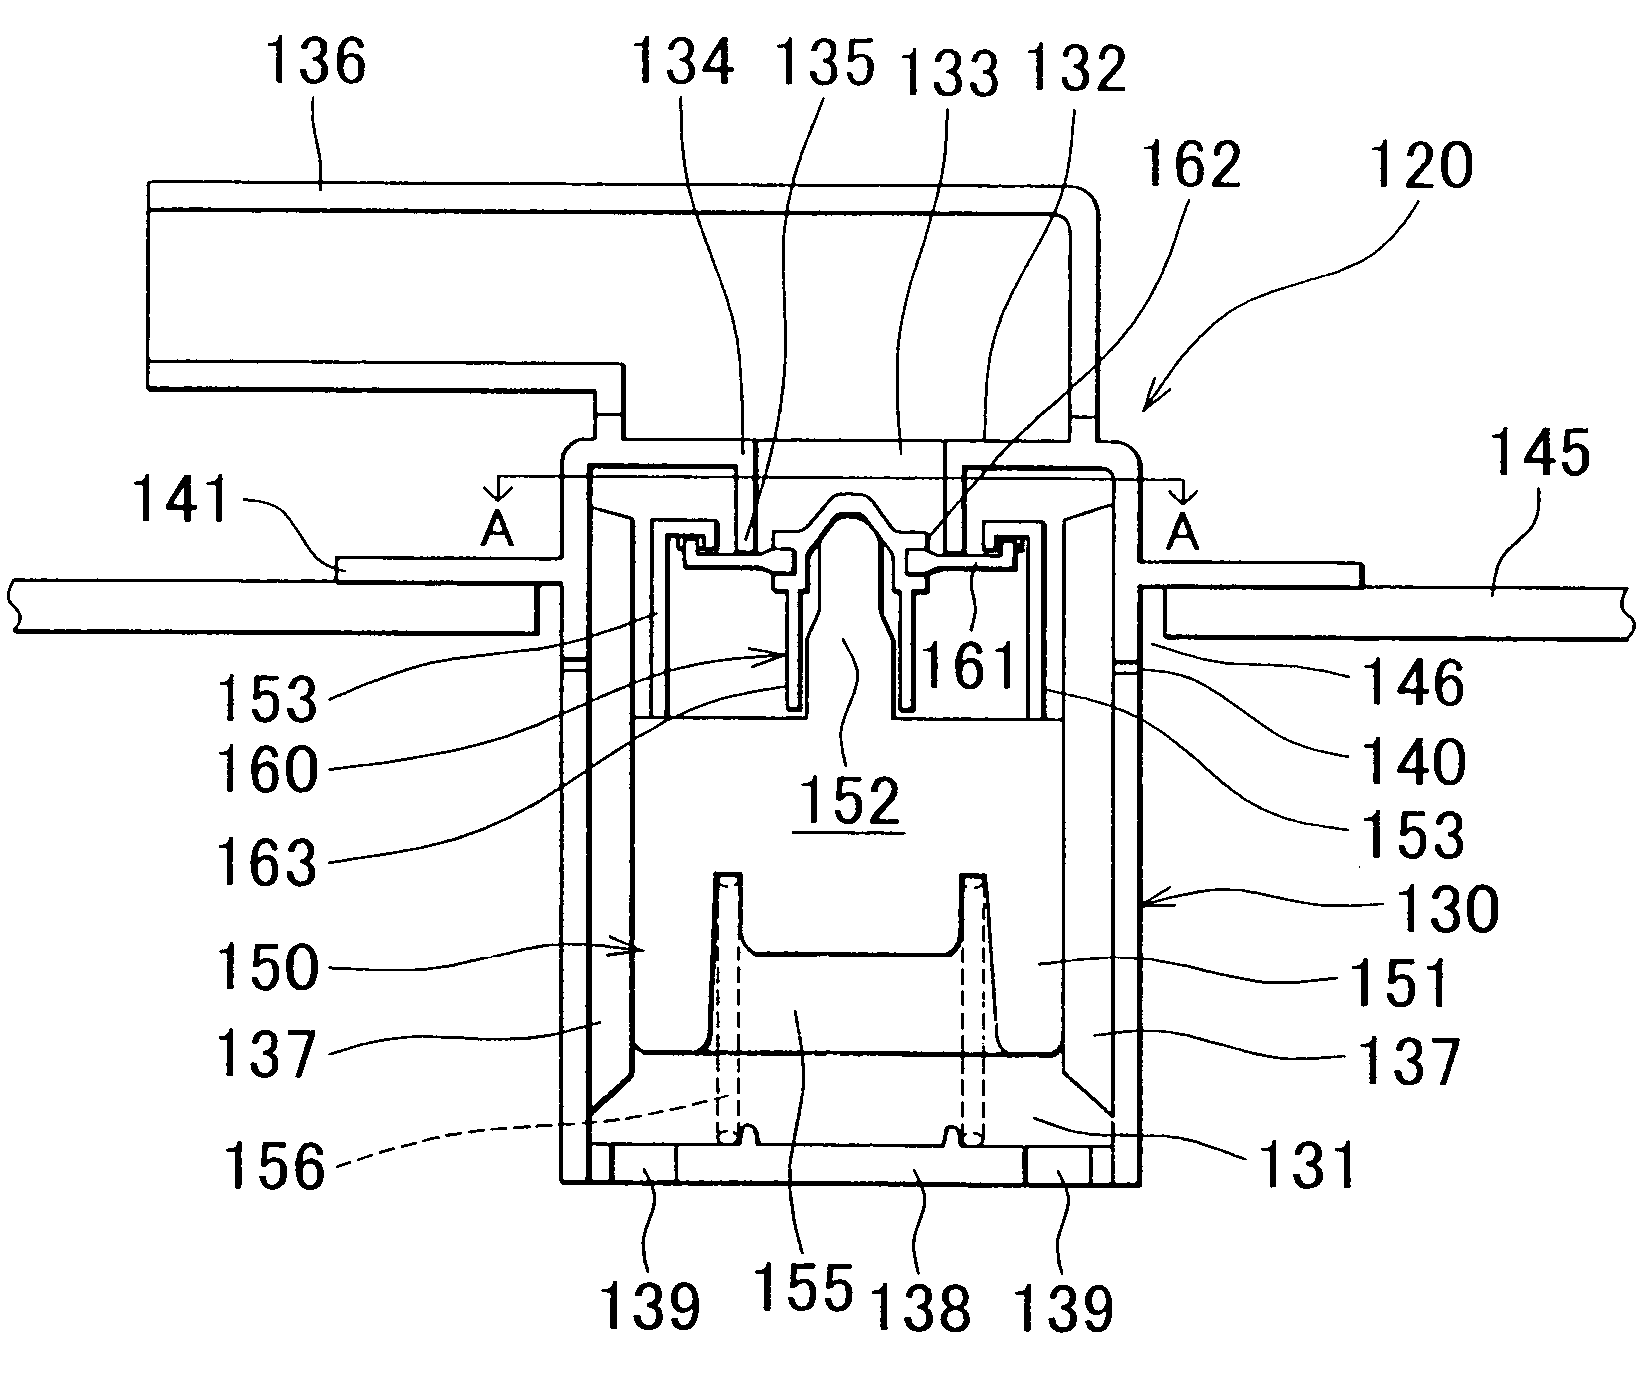 Float valve structure